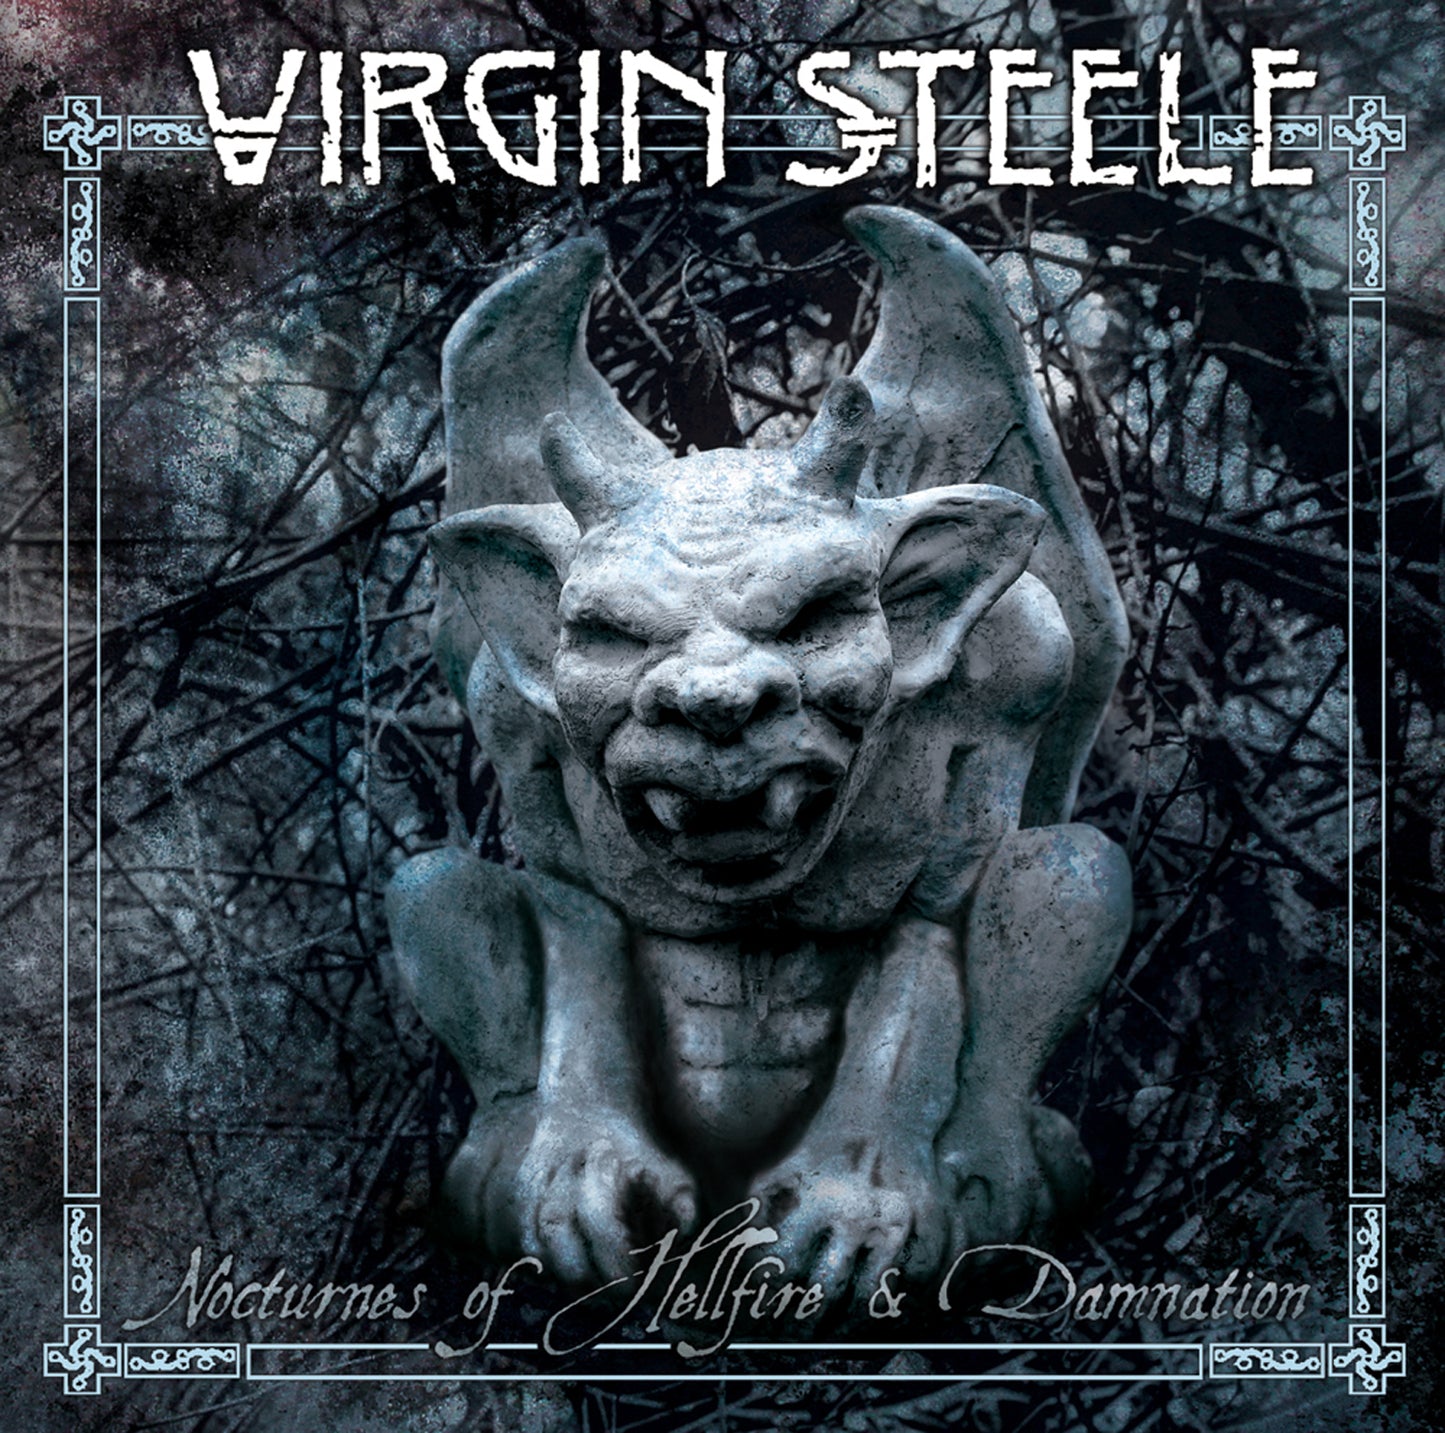 Virgin Steele "Nocturnes Of Hellfire & Damnation" CD